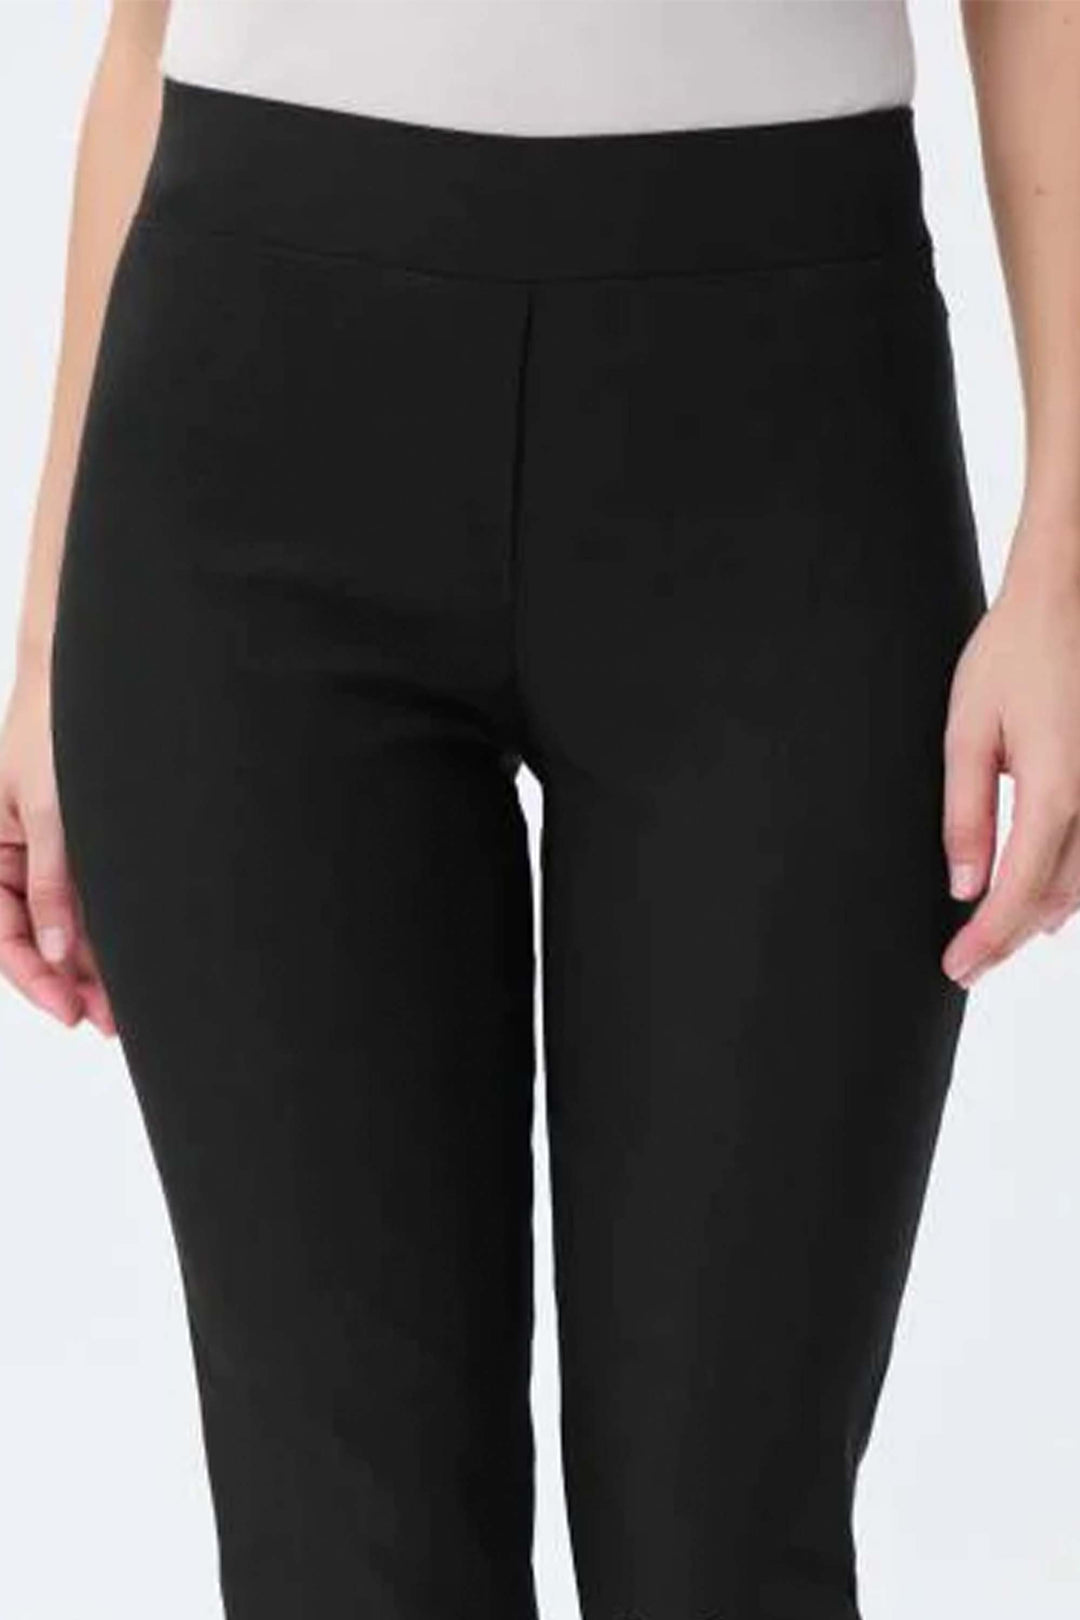 JOSEPH RIBKOFF SPRING '23 women's business casual pull-on cropped capri dress pants - black